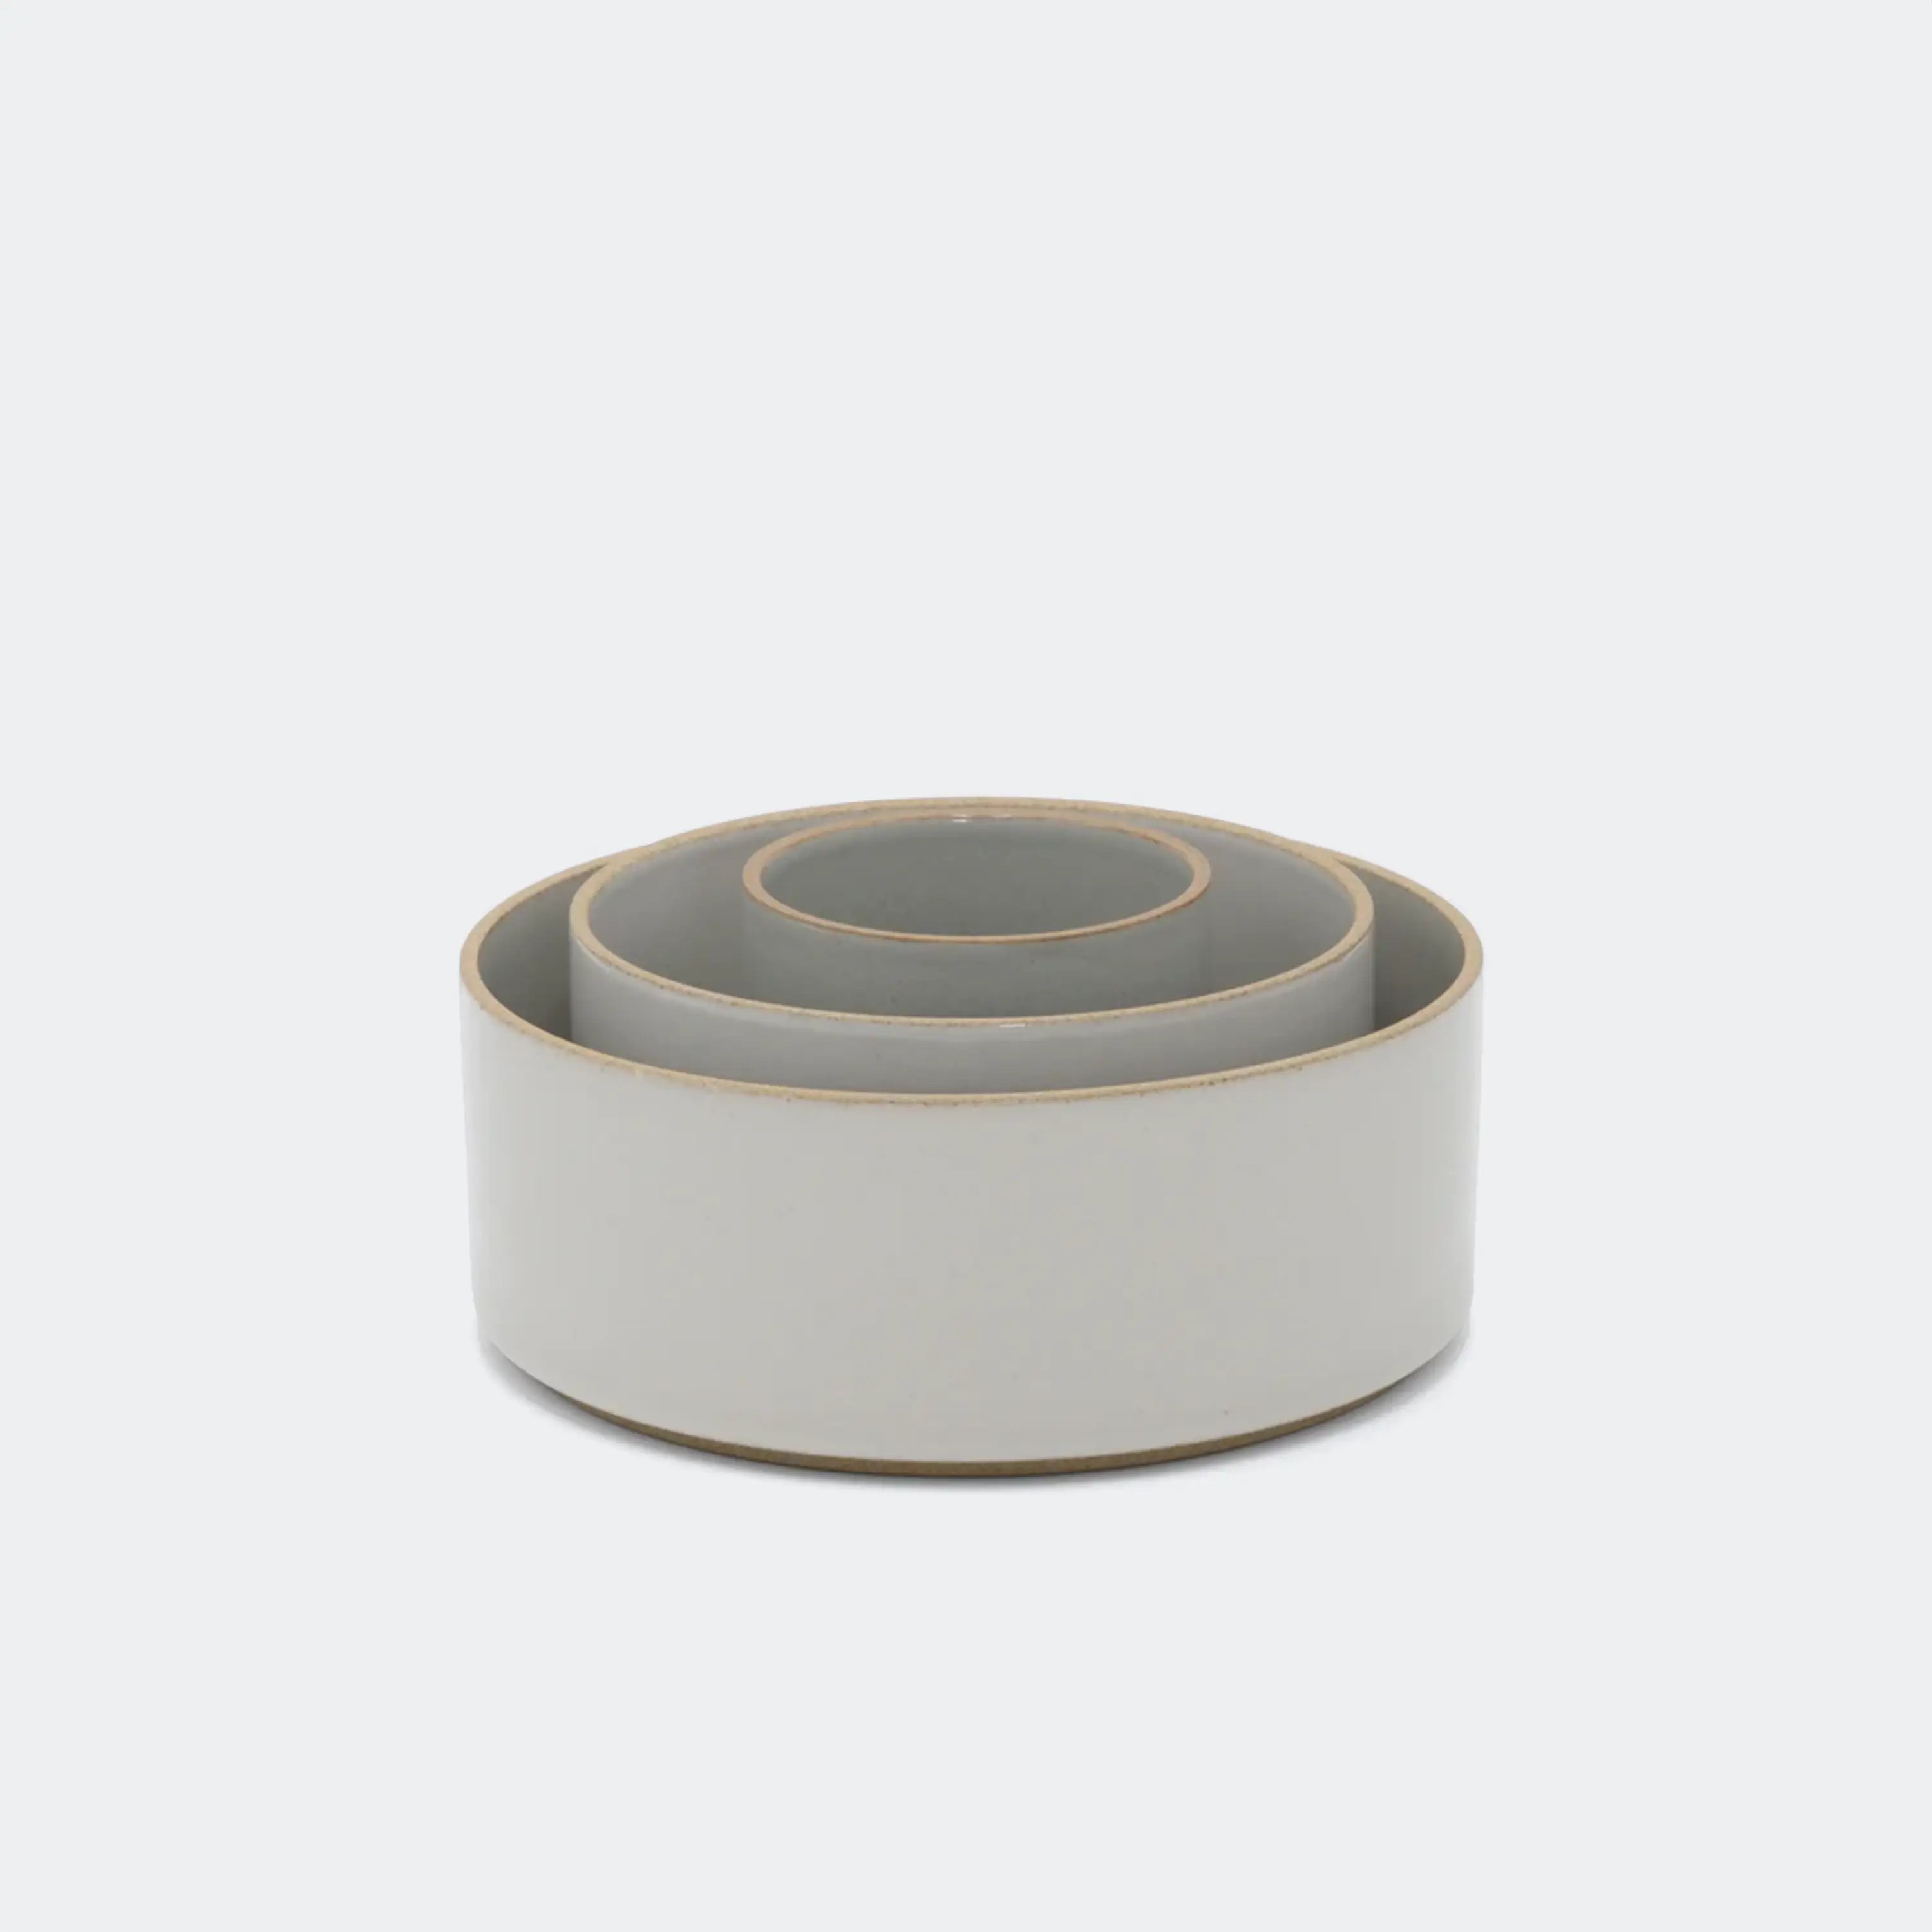 Hasami Porcelain Tall Bowl in Gloss Gray 3.33" - KANSO